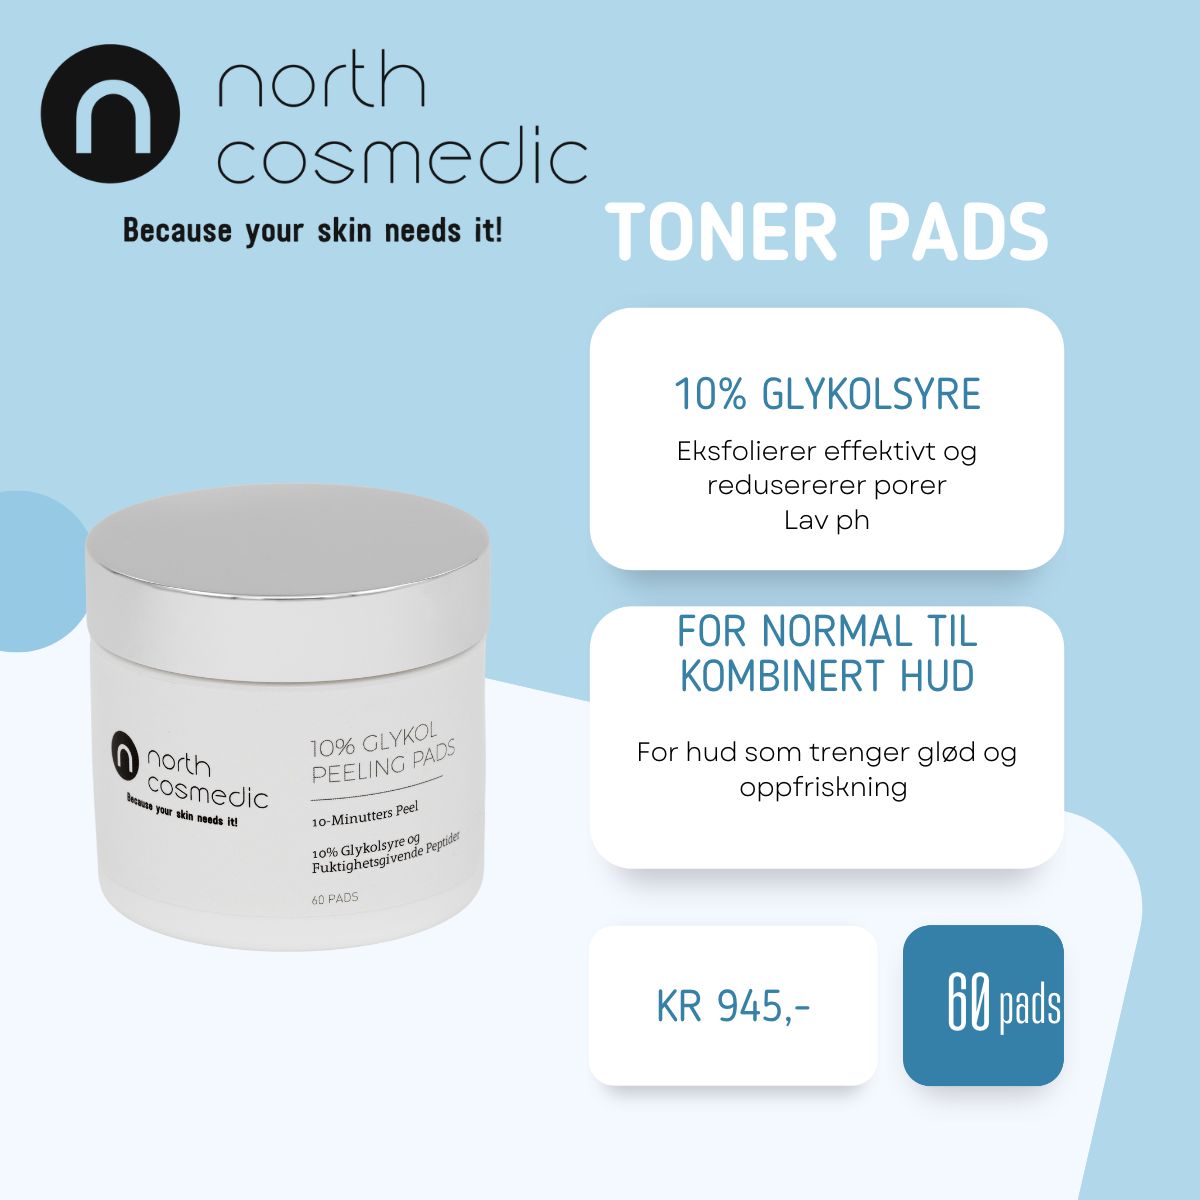 North Cosmedic 10% Glykol Peeling pads